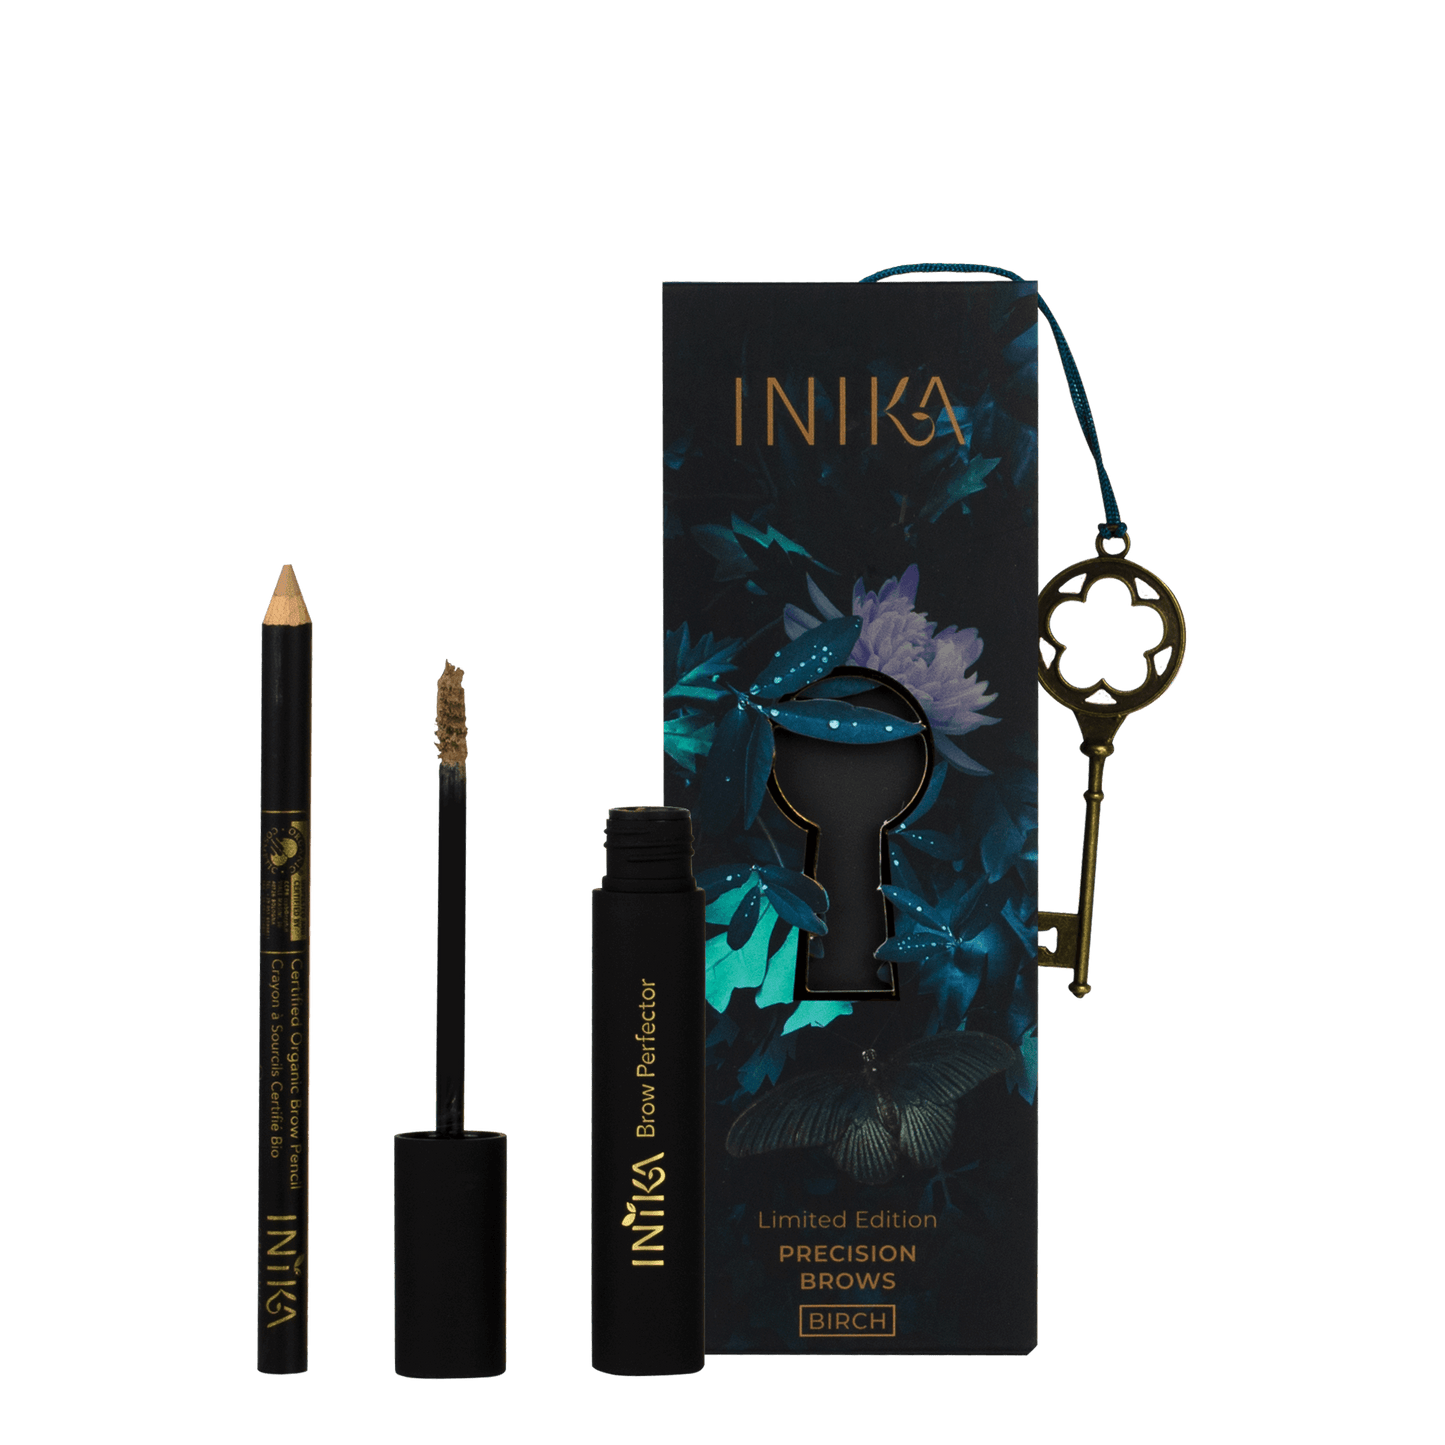 Limited Edition Precision Brows (Birch) | INIKA Organic